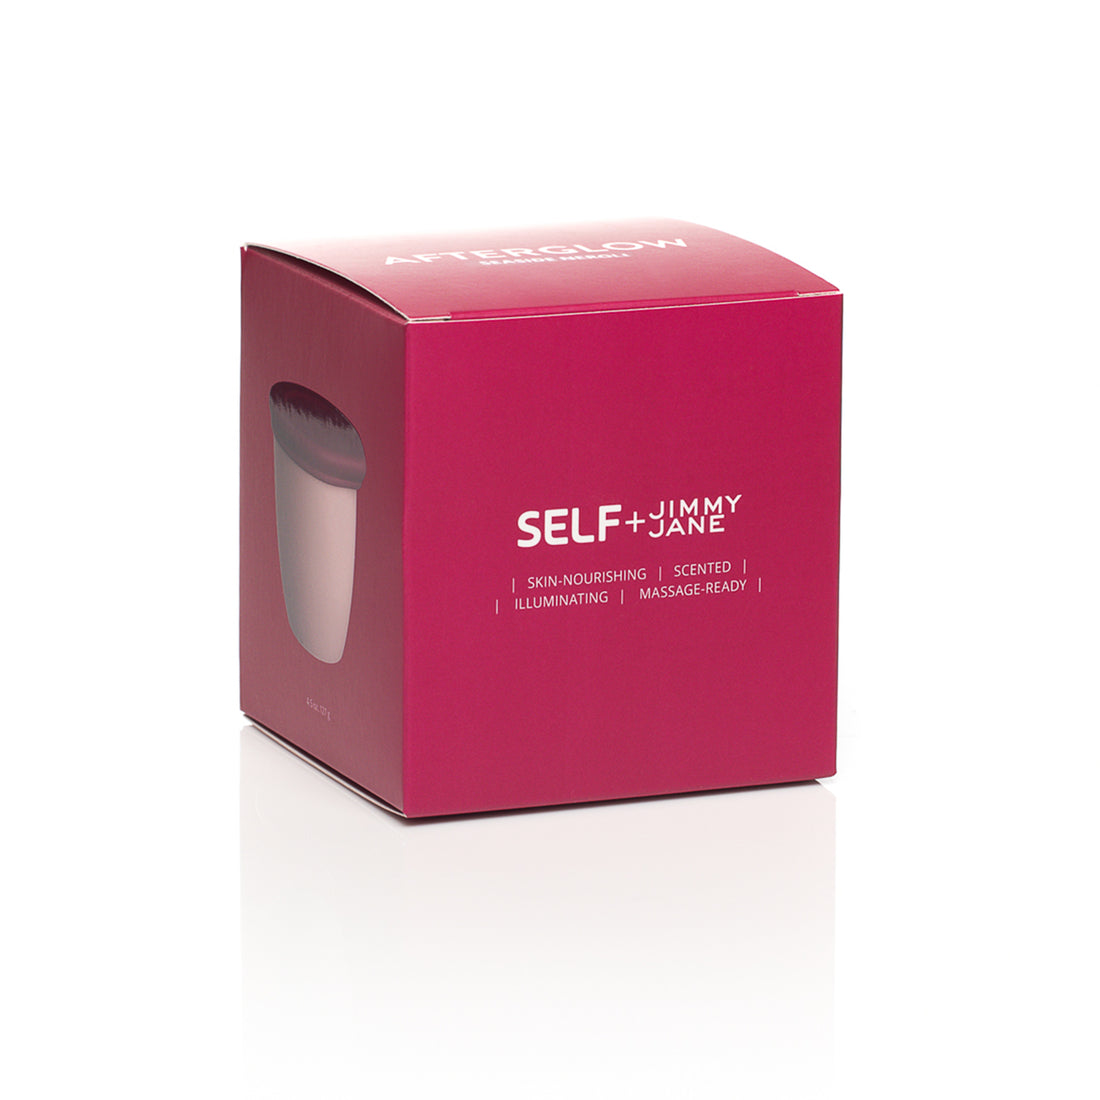 Self + Jimmyjane Seaside Neroli scented massage oil candle packaging